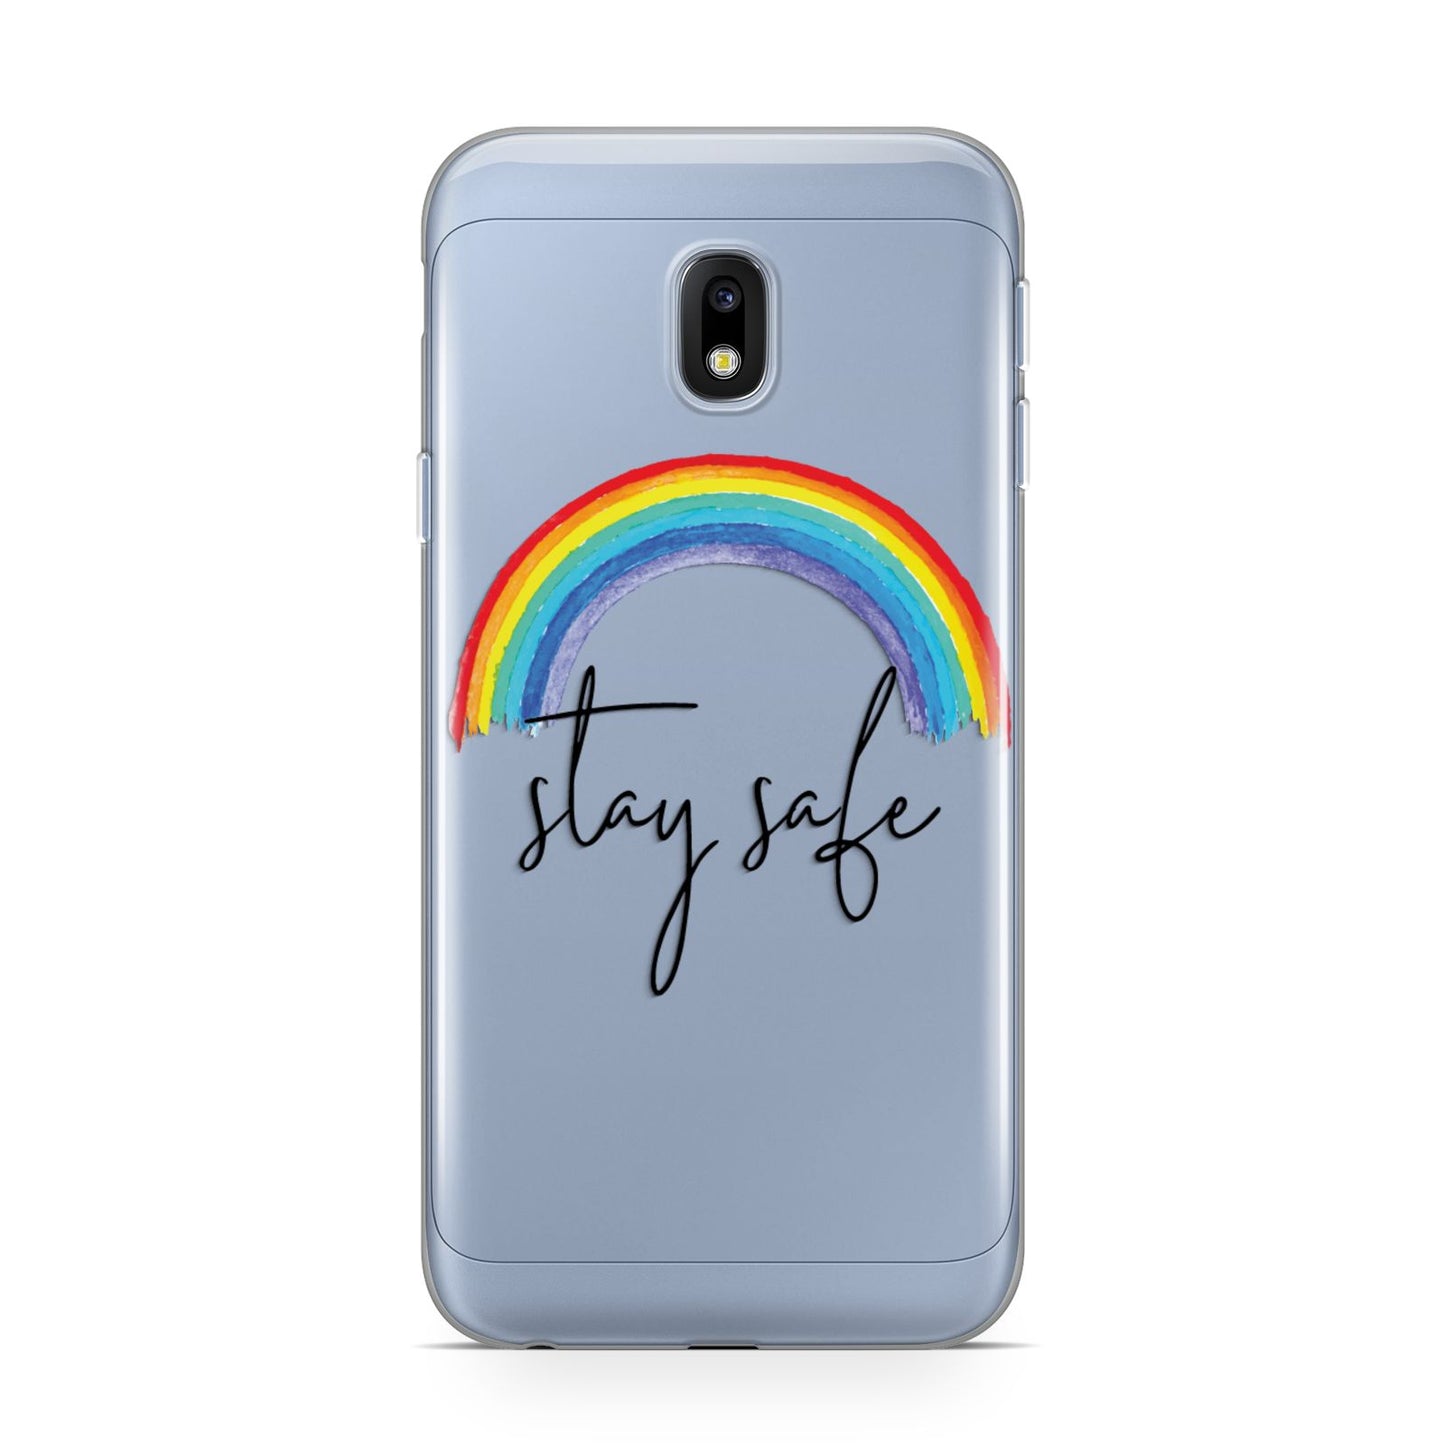 Stay Safe Rainbow Samsung Galaxy J3 2017 Case